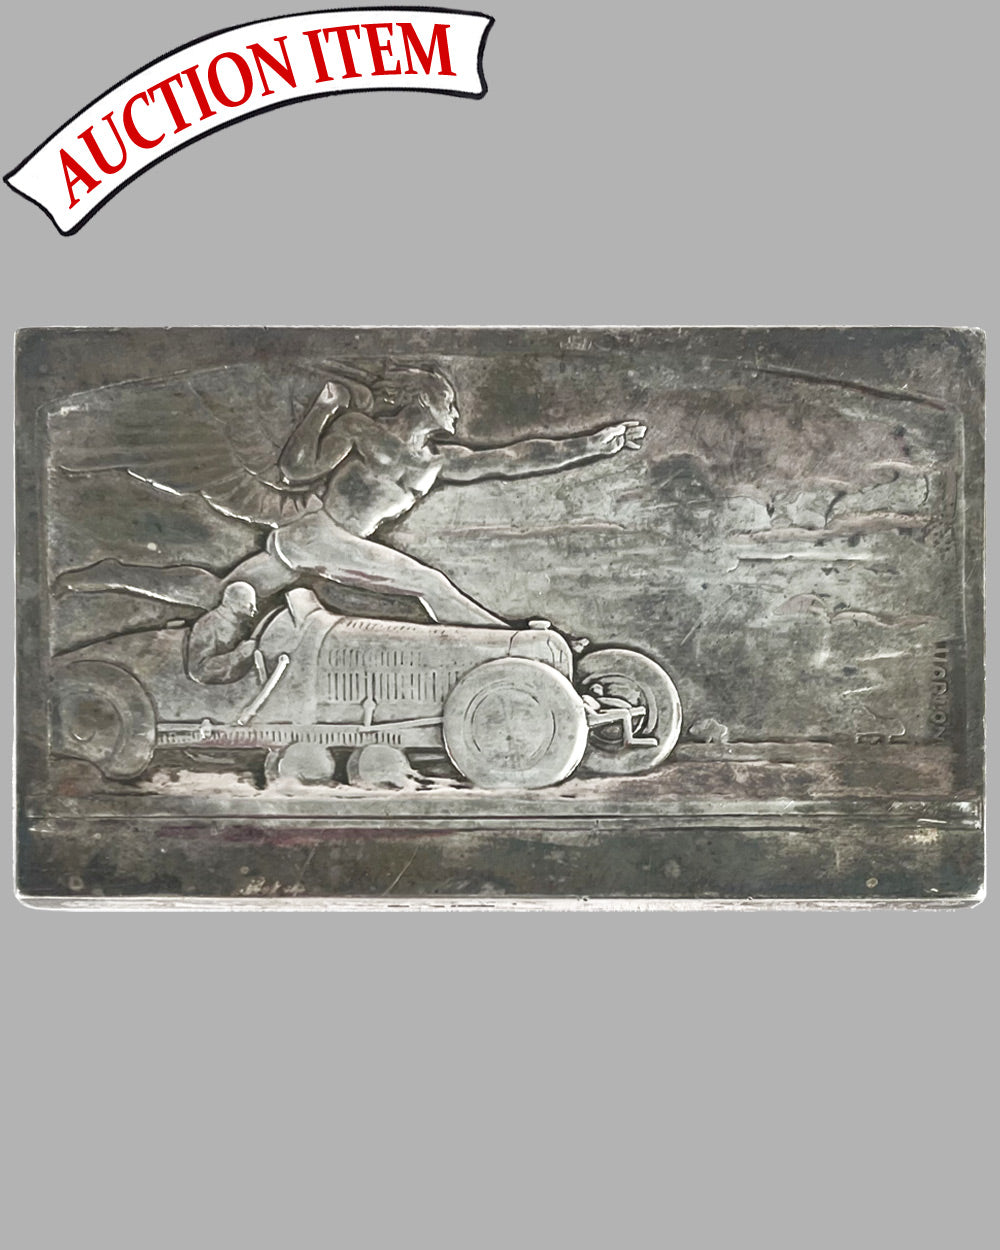 Stirling silver plaque by Morlon